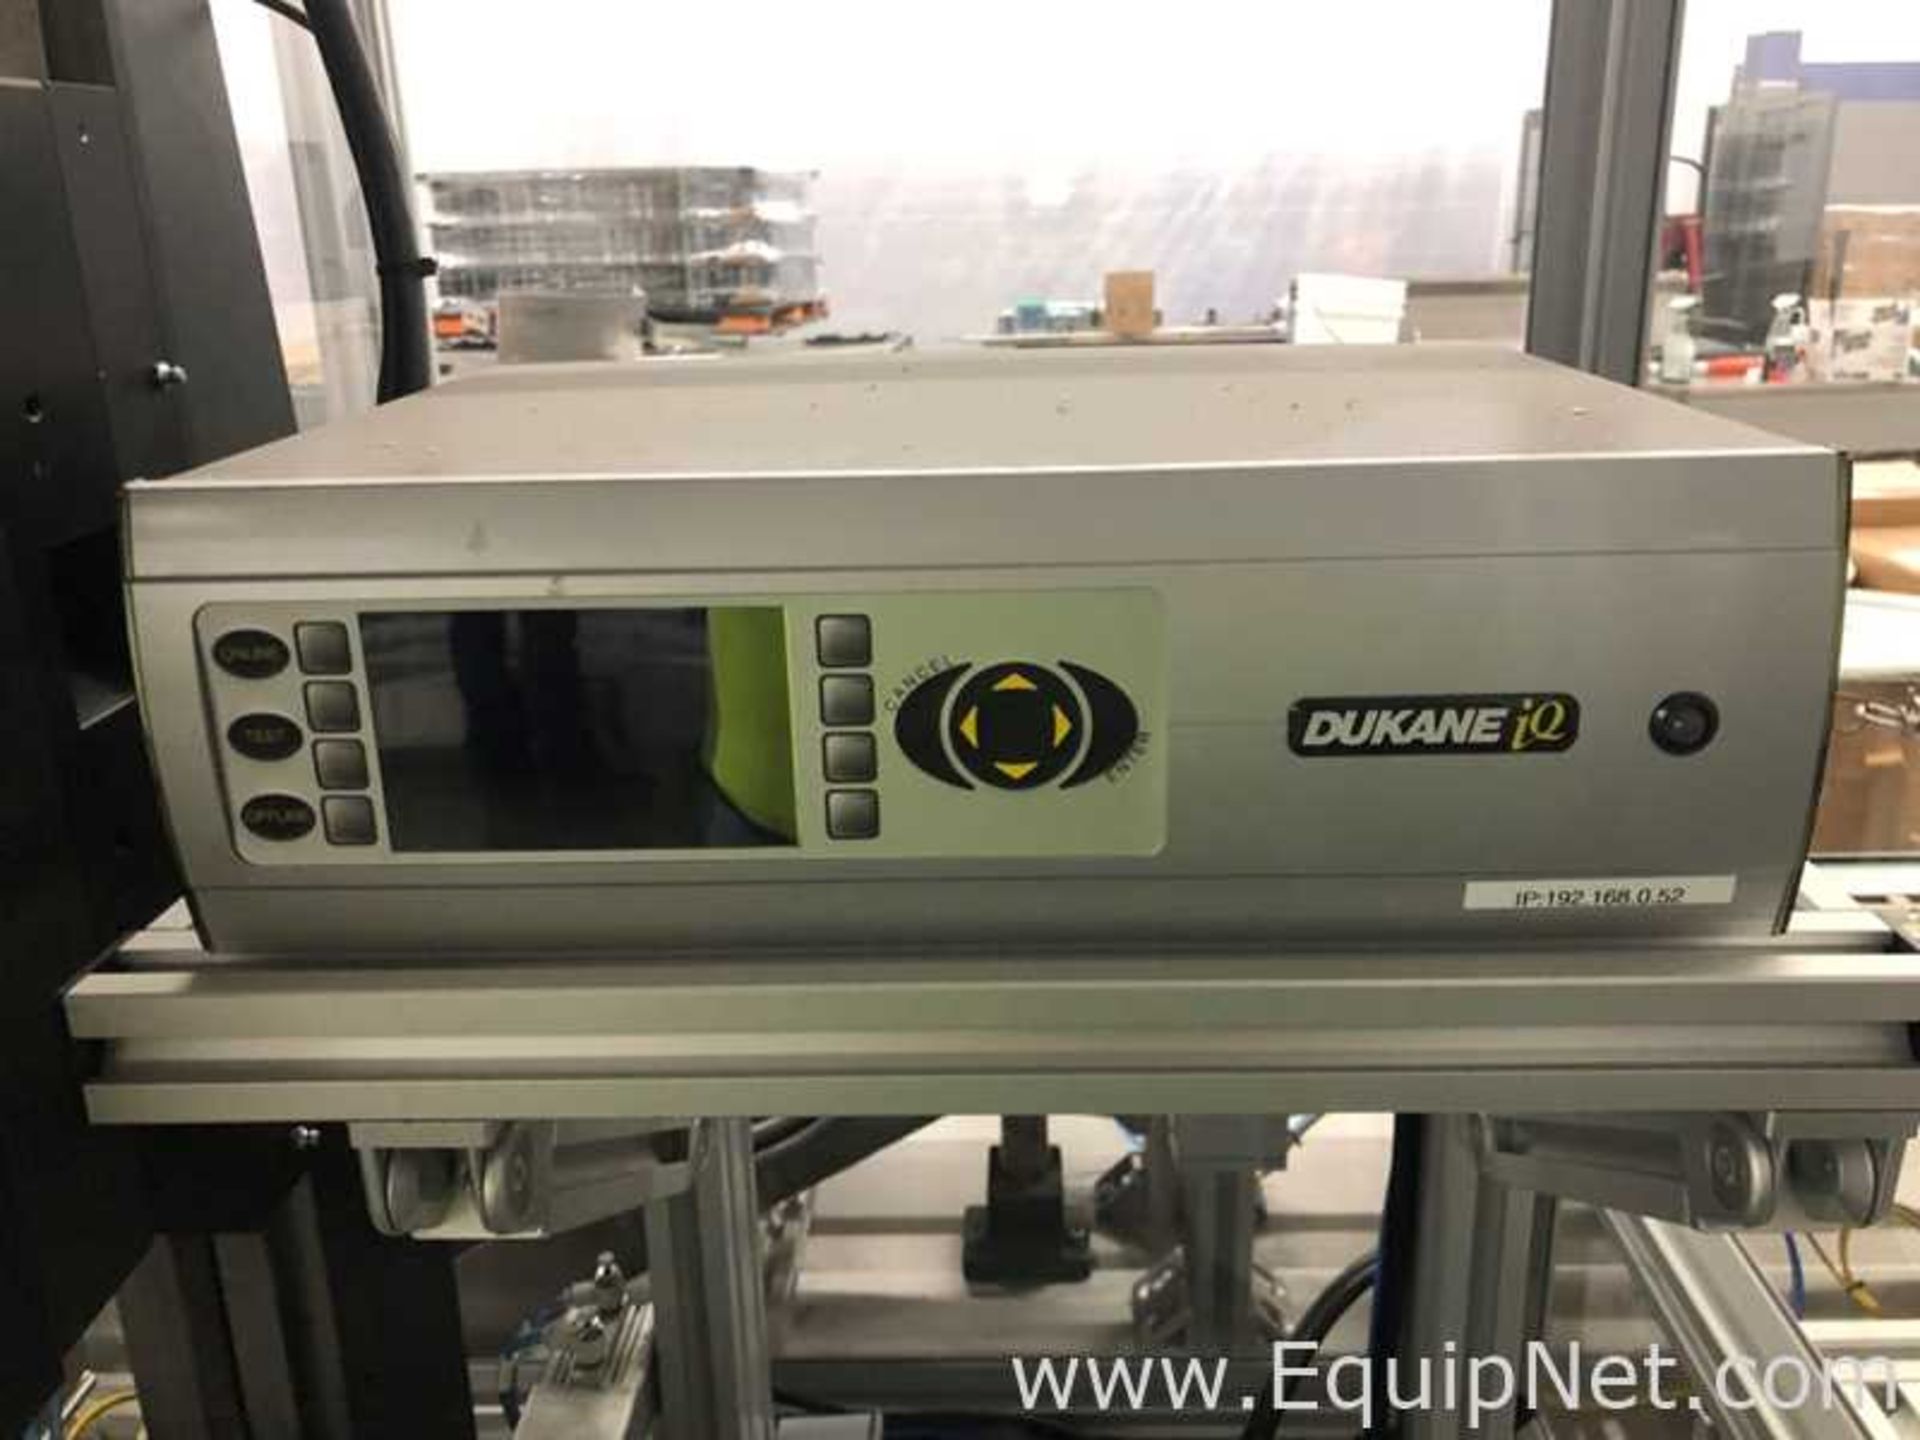 Two Dukane iQ Sevo Ultrasonic Welding Units And Controllers - Image 16 of 16